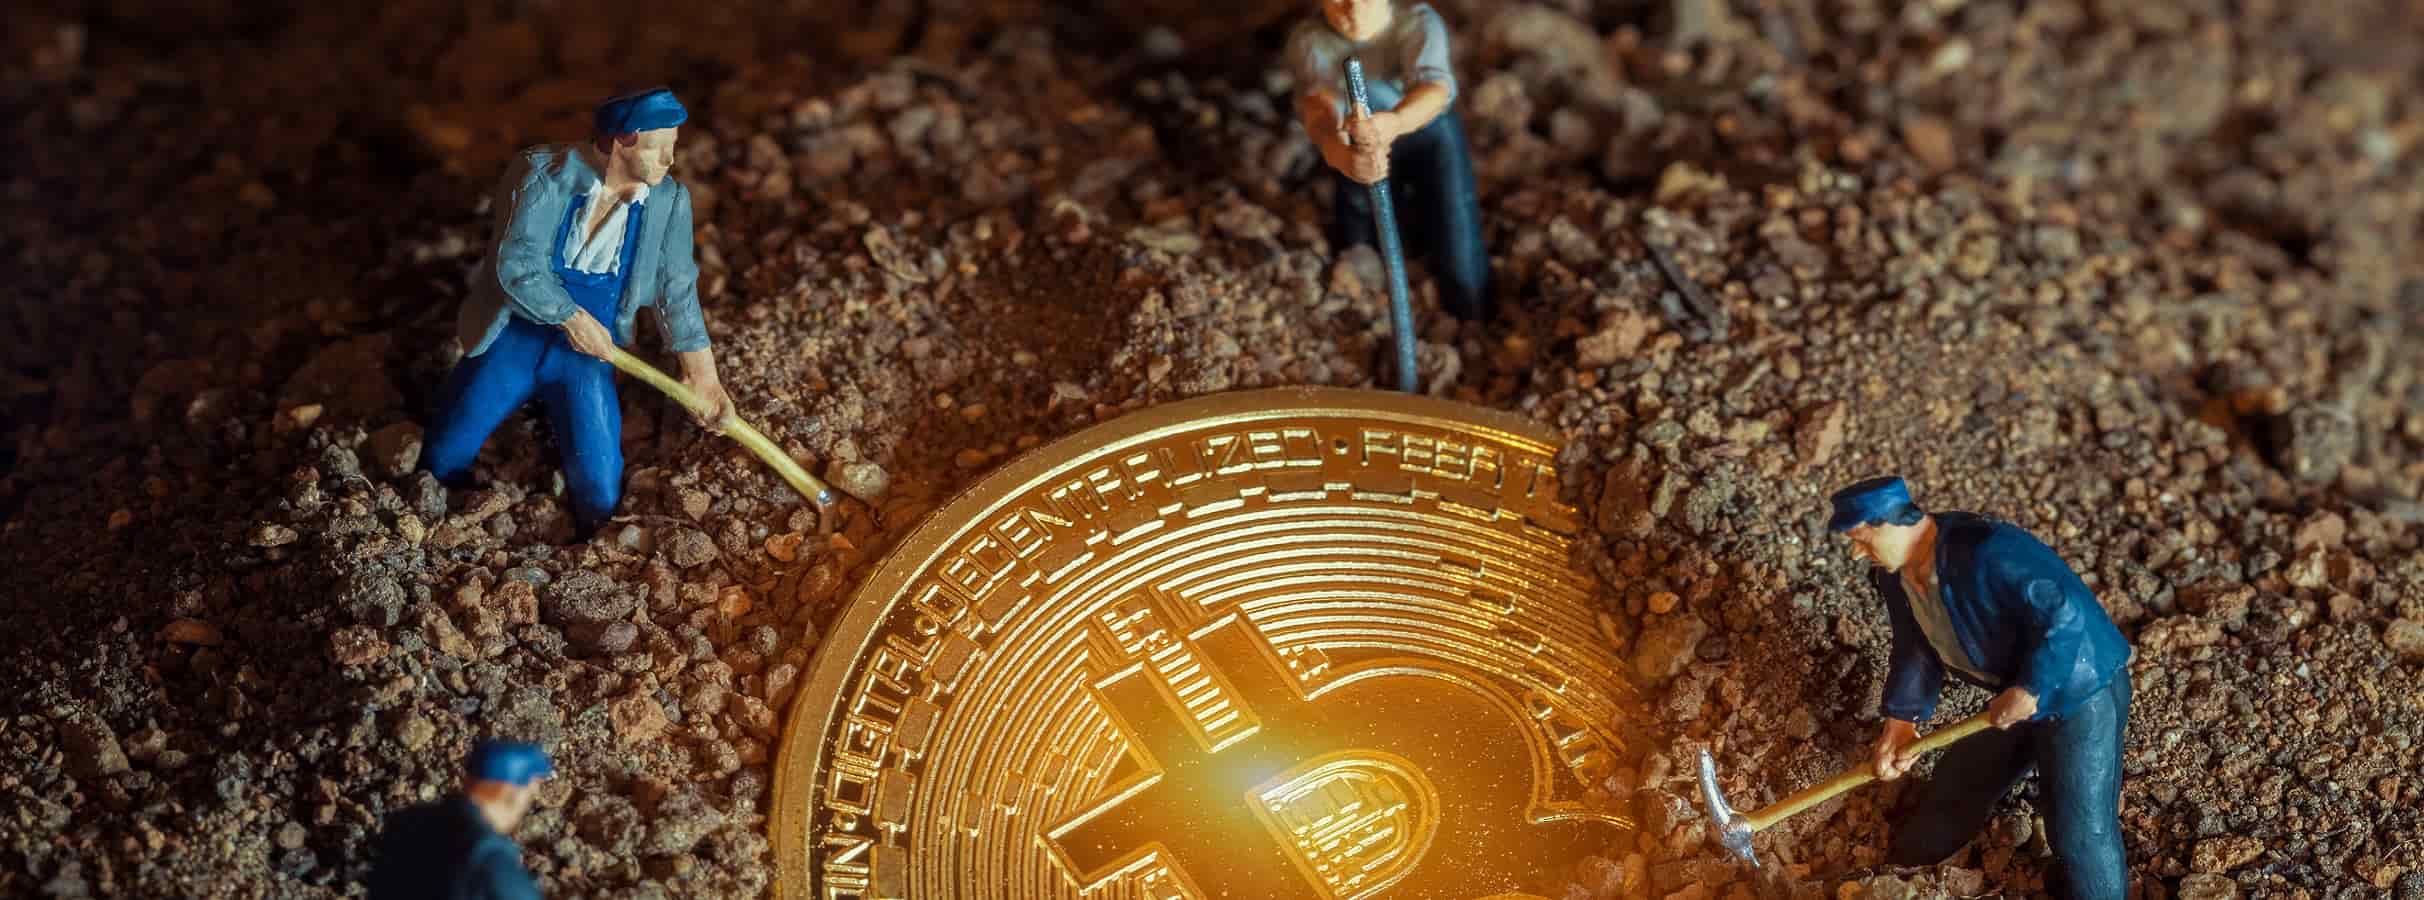 Bitcoin mining: che cos’è? Ci si guadagna? - Panda Security Mediacenter